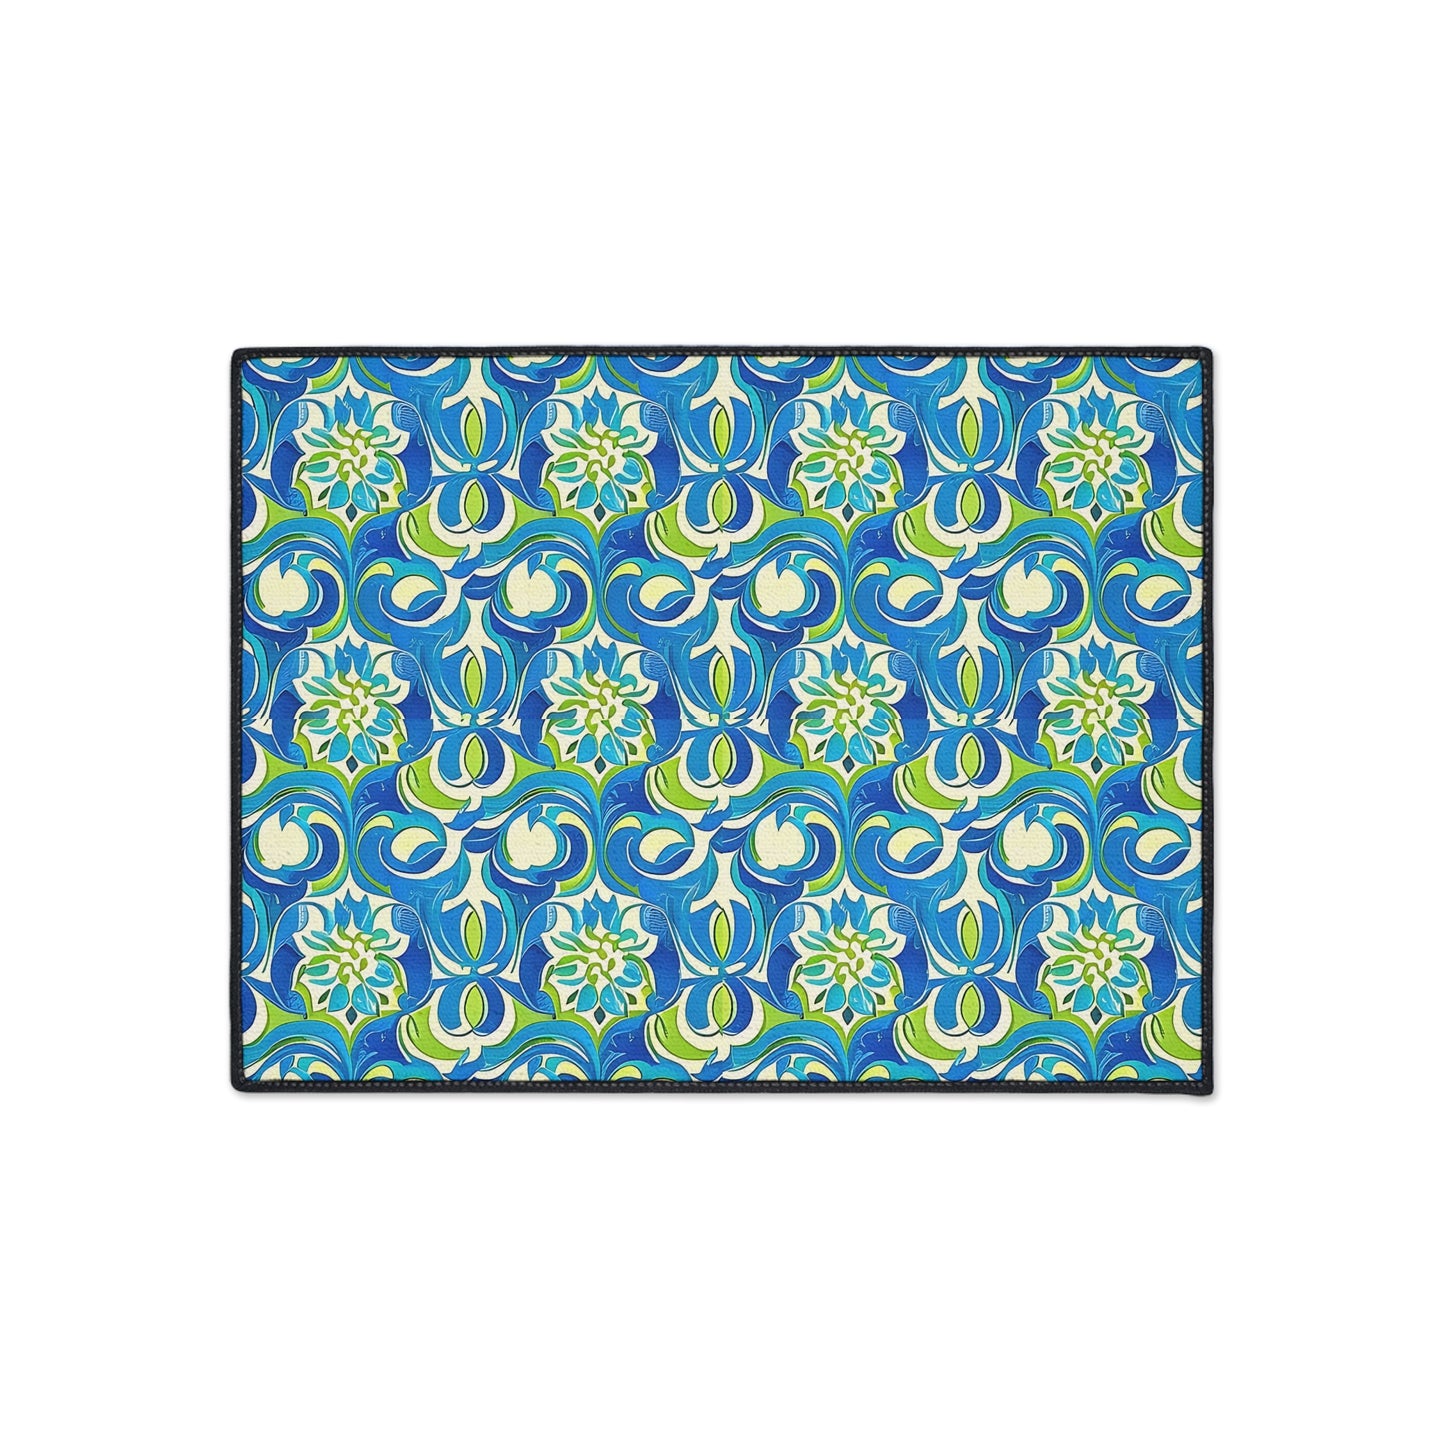 Naples Osteria Sea Blue Italian Tile Pattern Decorative Indoor Outdoor Home Heavy Duty Floor Mat